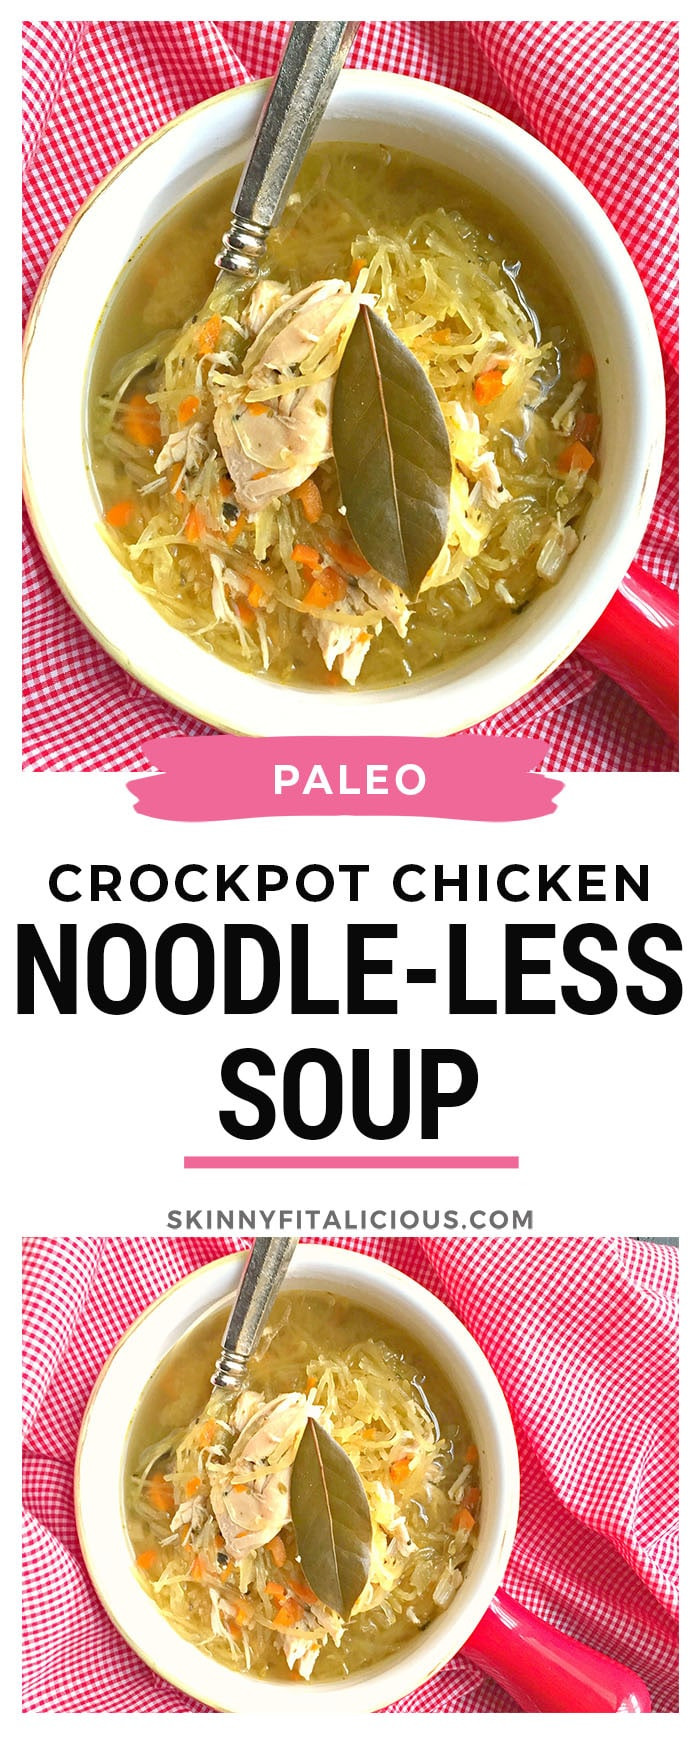 Low Calorie Chicken Soup
 Chicken Noodle less Soup Paleo GF Low Cal Skinny